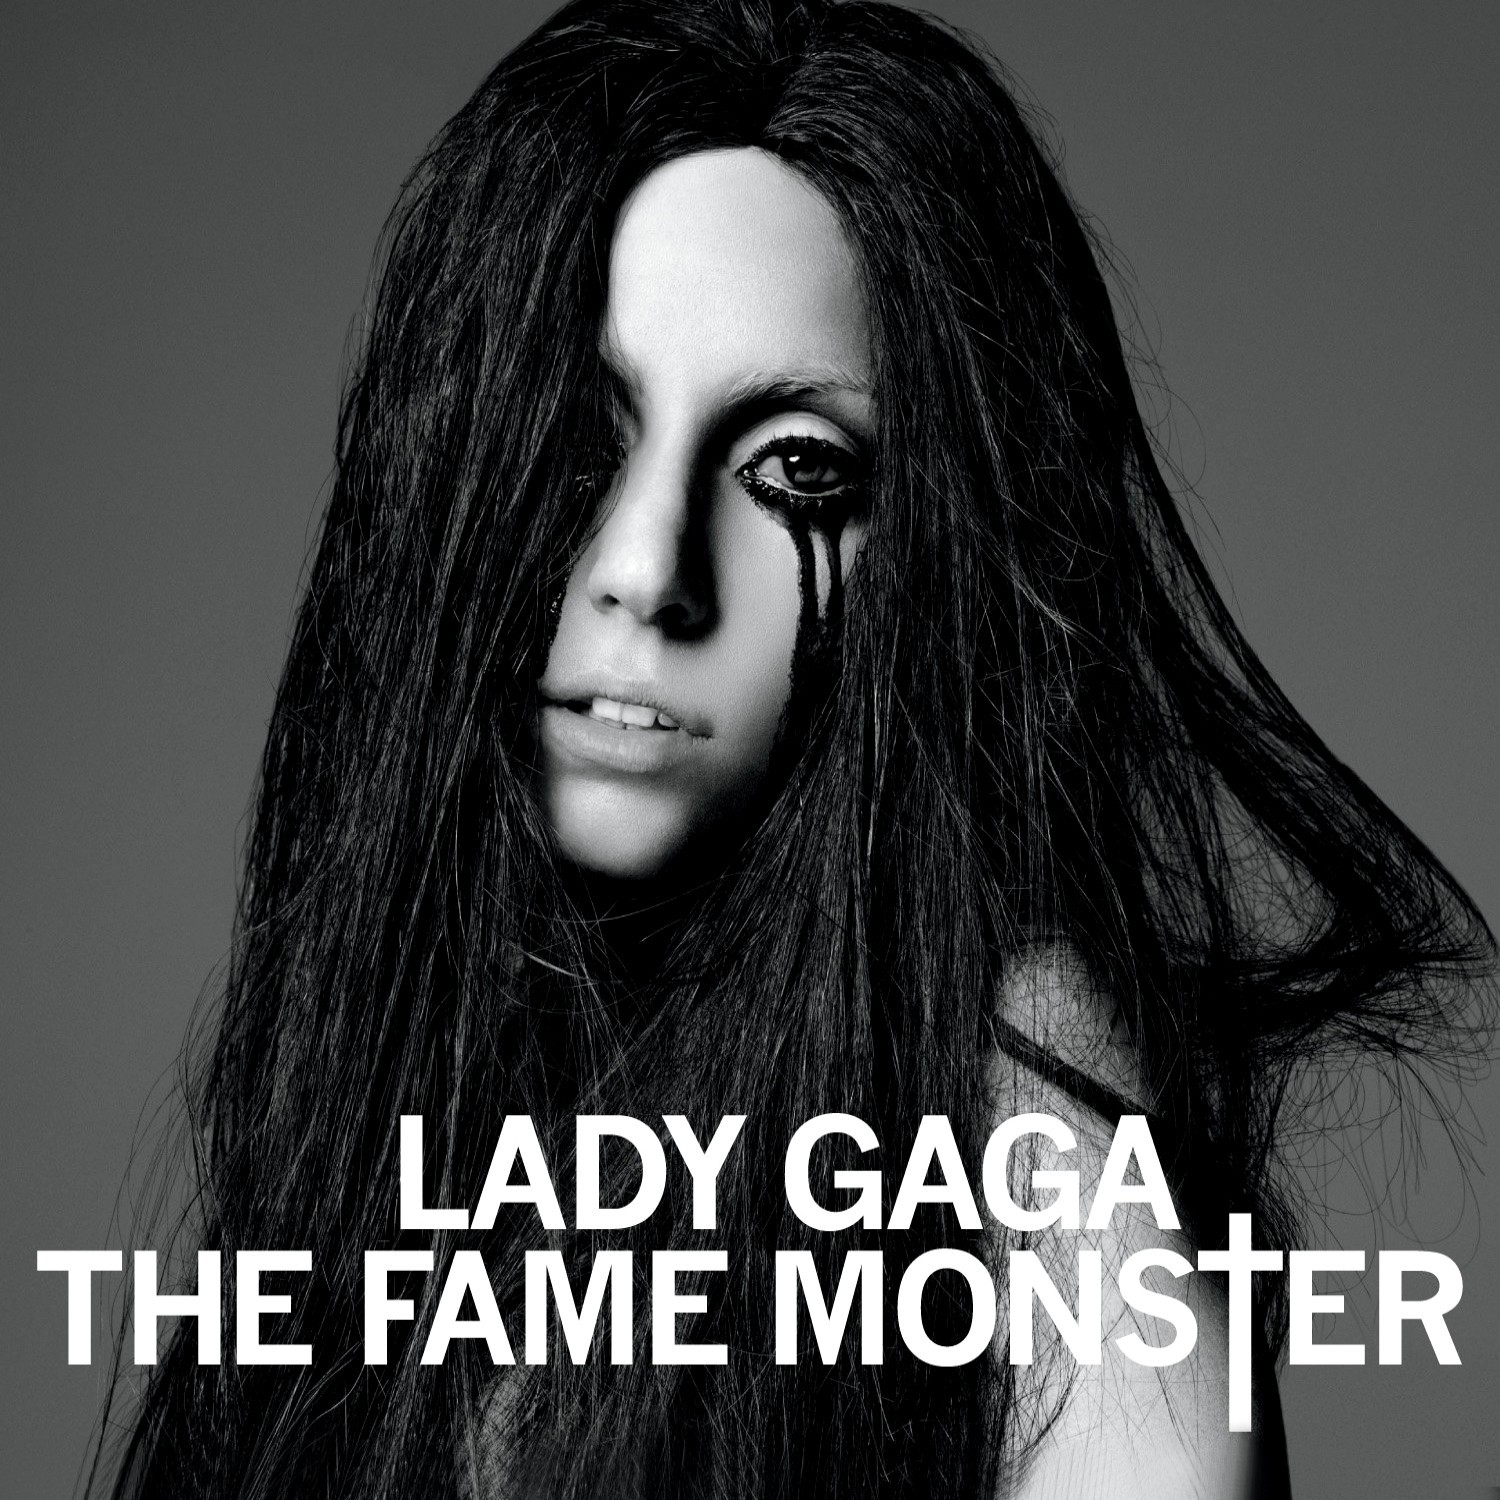 http://3.bp.blogspot.com/-il3yHv35_AE/TdtfvpOSnSI/AAAAAAAAFvY/D9x7NstVRtA/s1600/Lady-Gaga-The-Fame-Monster.jpg